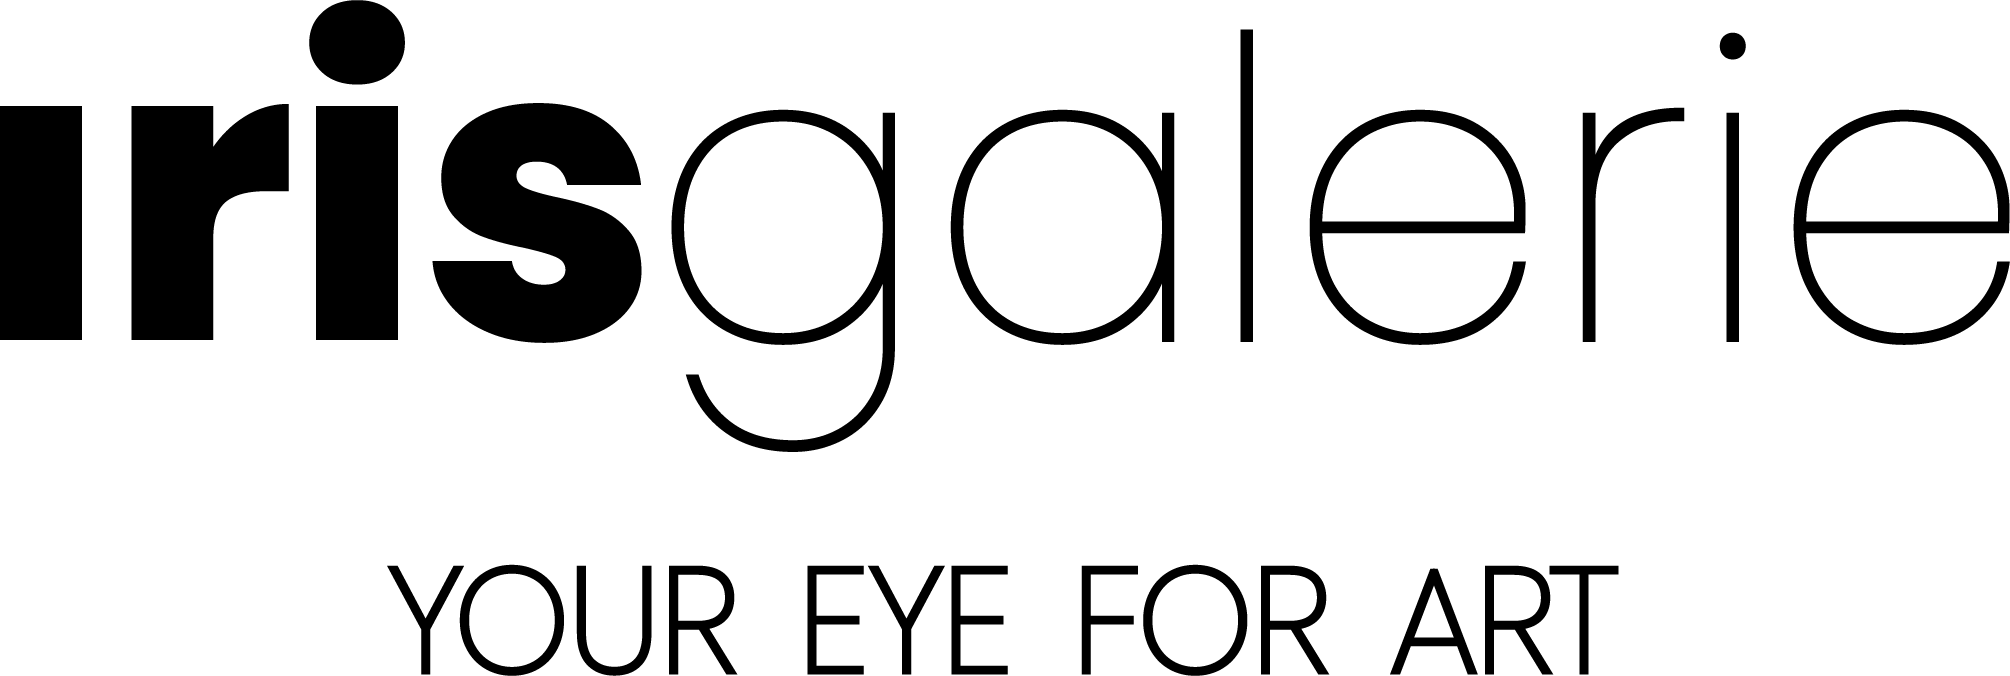 Iris gallery logo with tagline